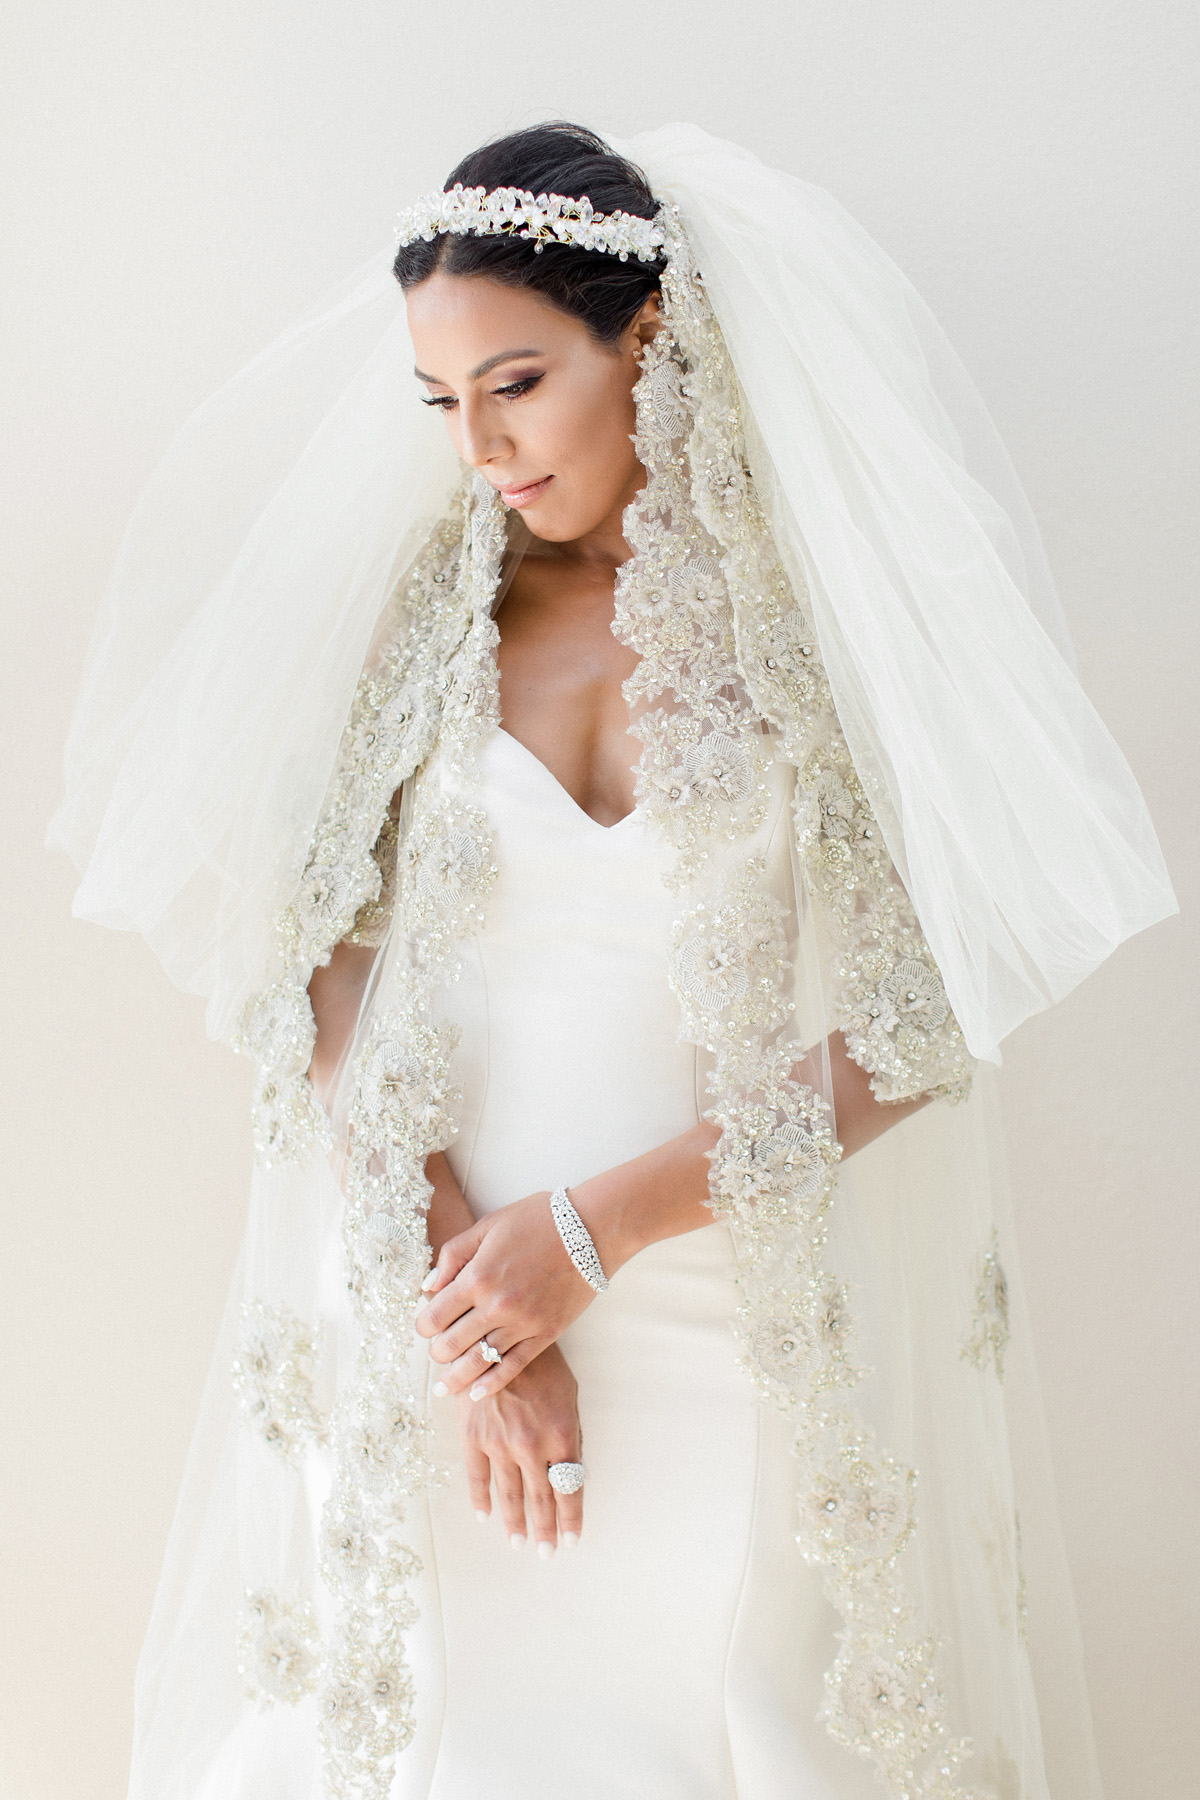 Monique Lhuillier wedding dress and dramatic wedding veil